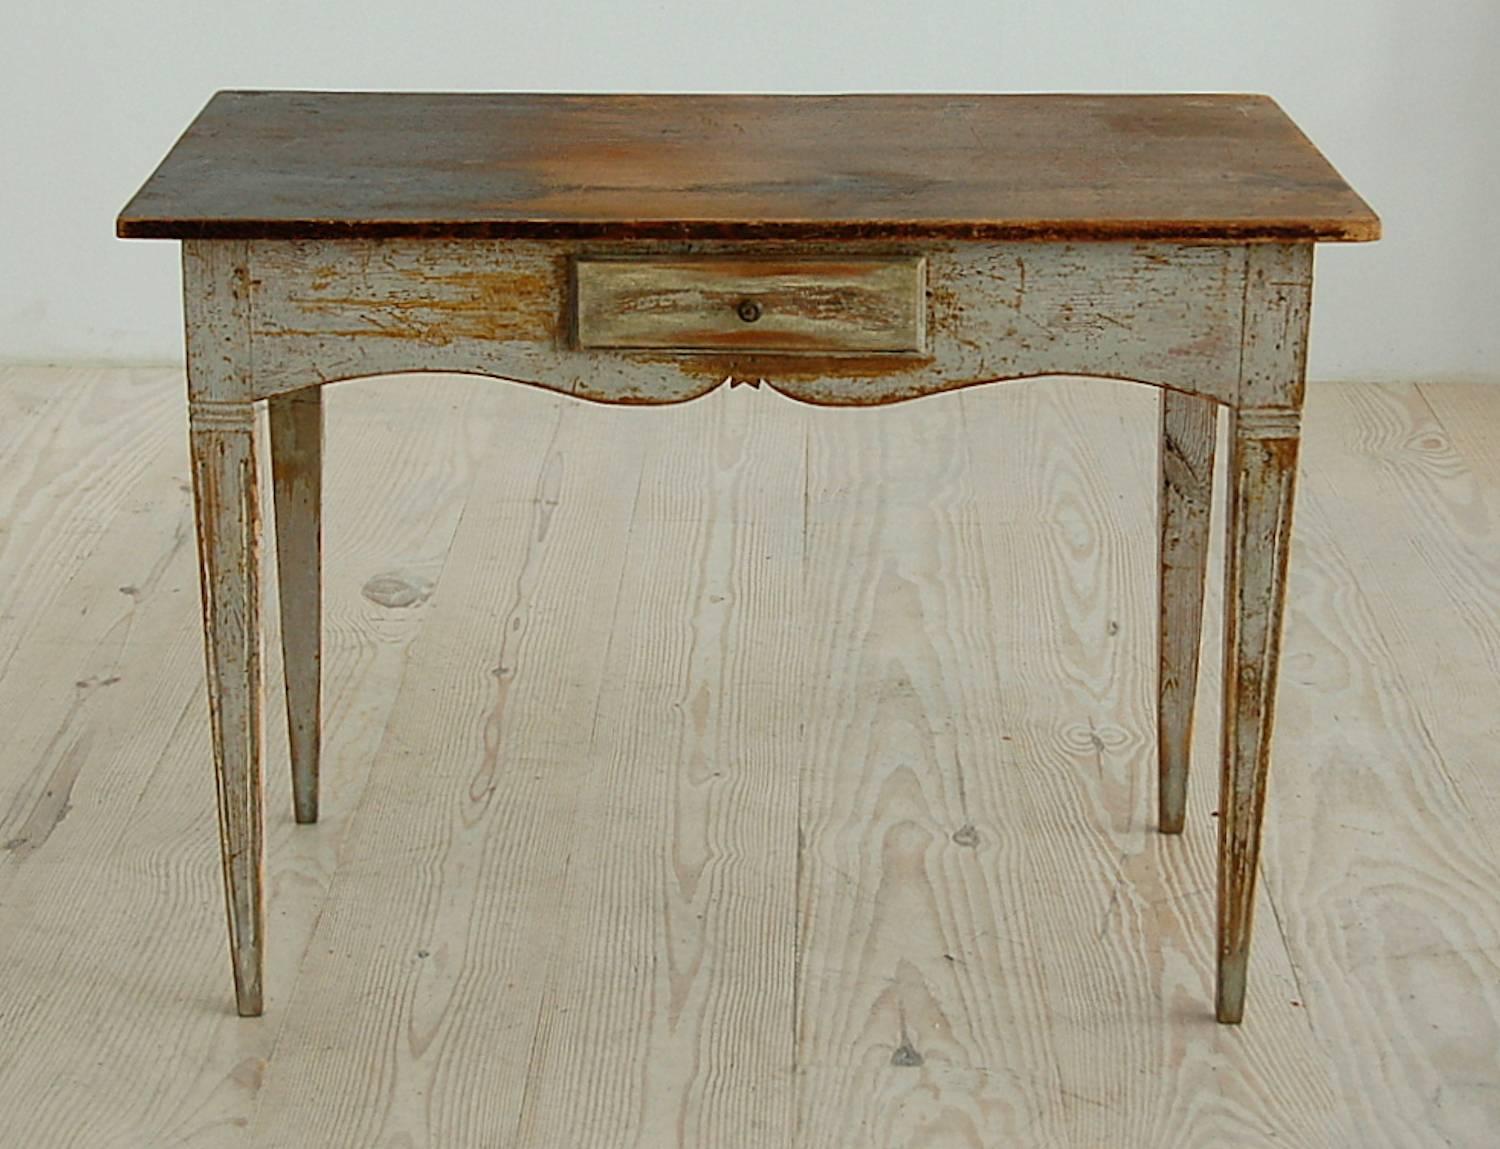 Swedish Gustavian writing table with single drawer, circa 1780, origin: Sweden

Original paint and hardware.